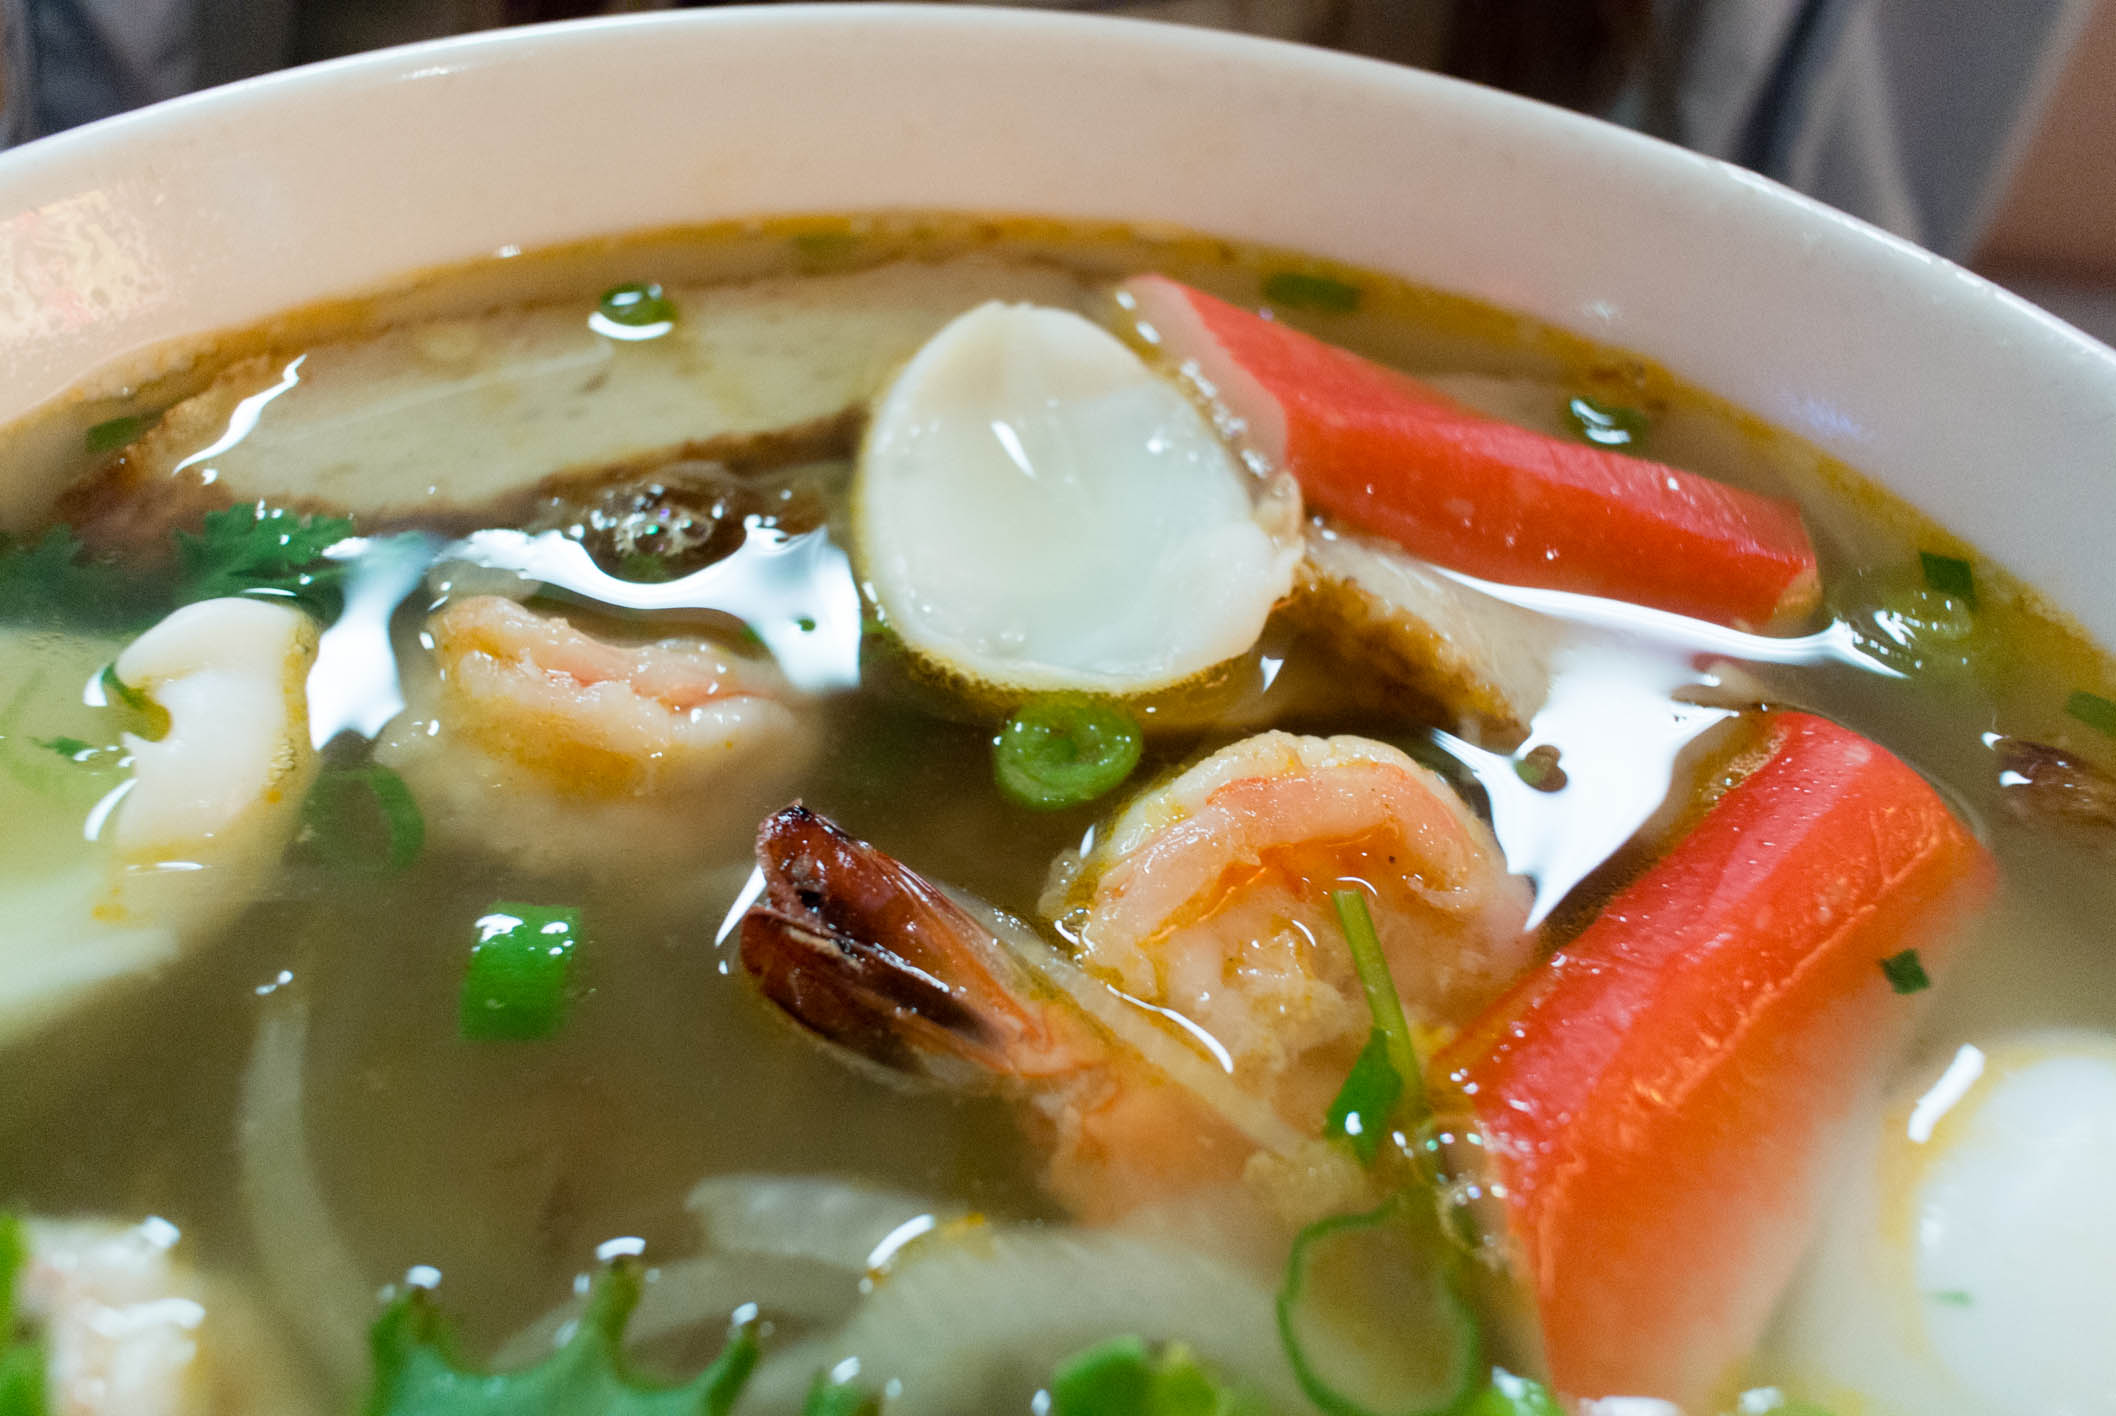 a bowl of soup with shrimp, carrots and noodles